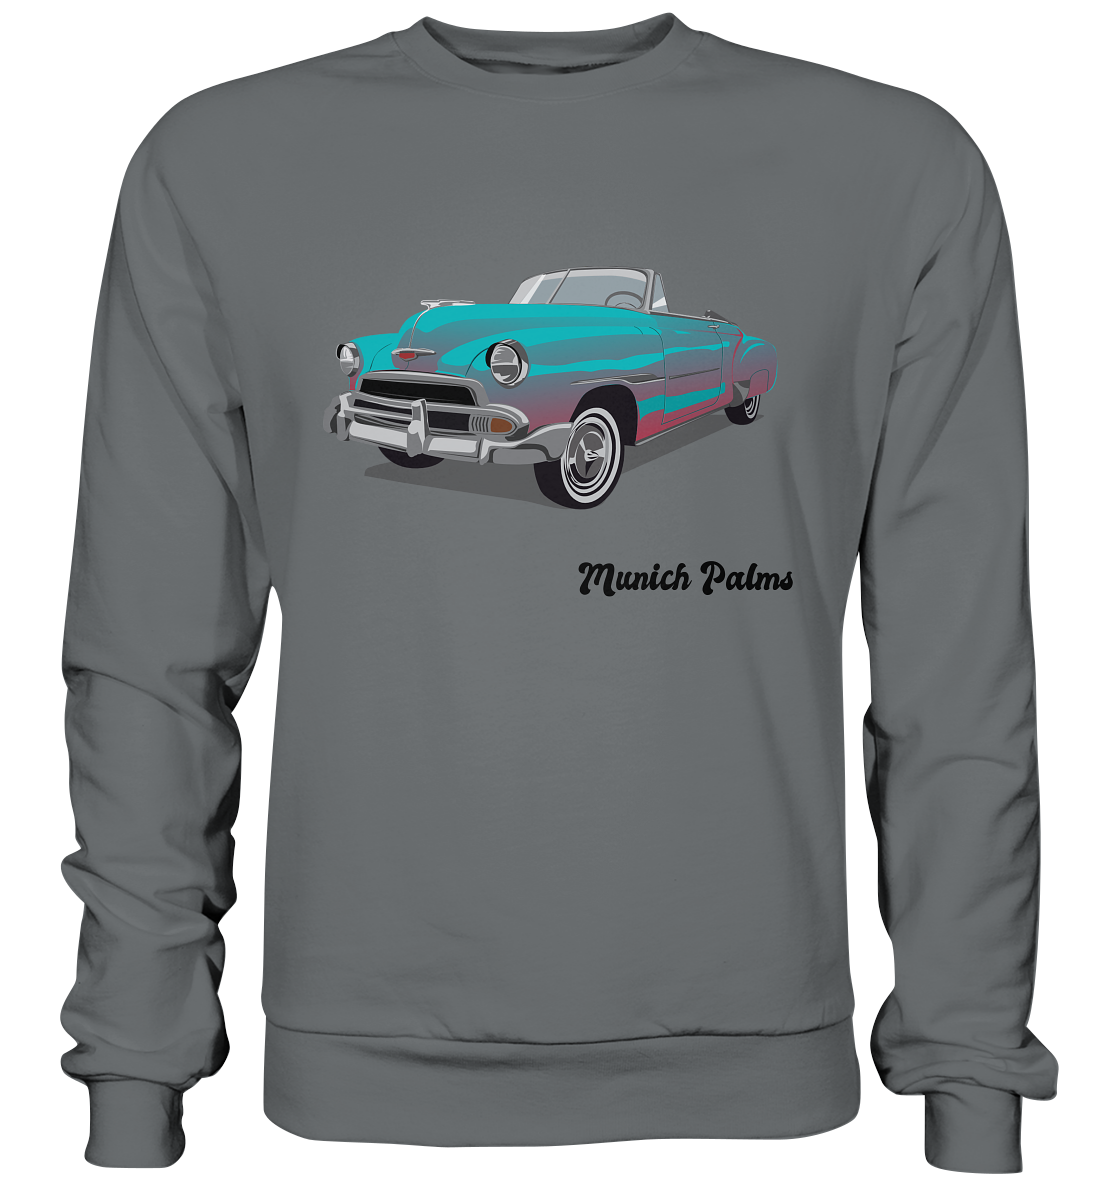 Fleetline Retro Classic Car Oldtimer, Car, Convertible by Munich Palms - Basic Sweatshirt